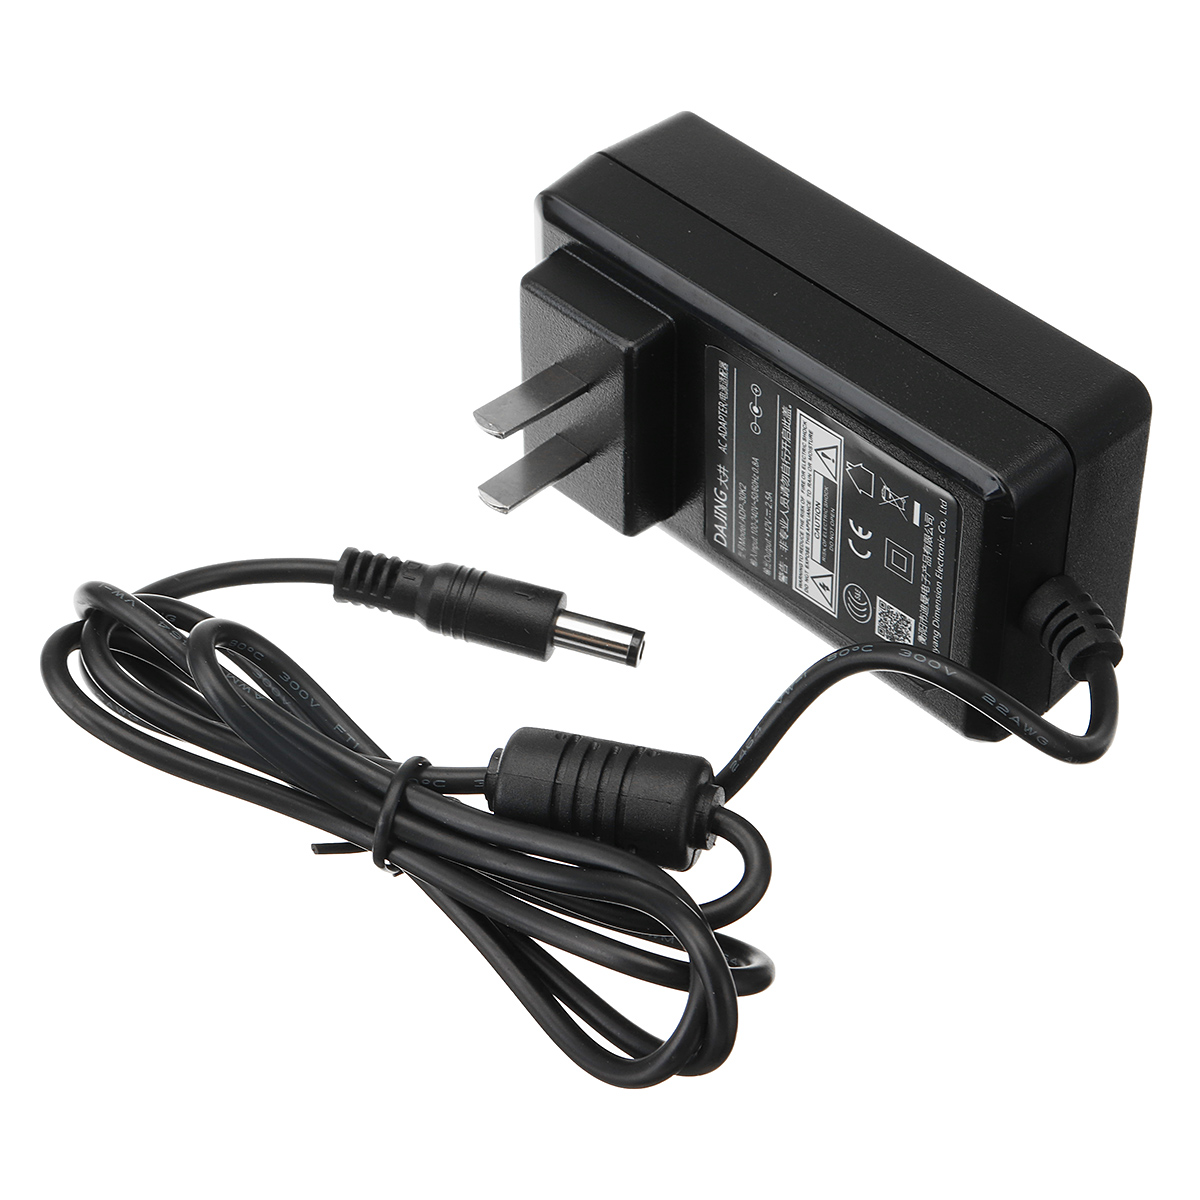 Power-20-Power-AC-Adapter-USEUAU-Plug-PC-Development-Kit-For-Xbox-One-SX-Kinect-1319225-7